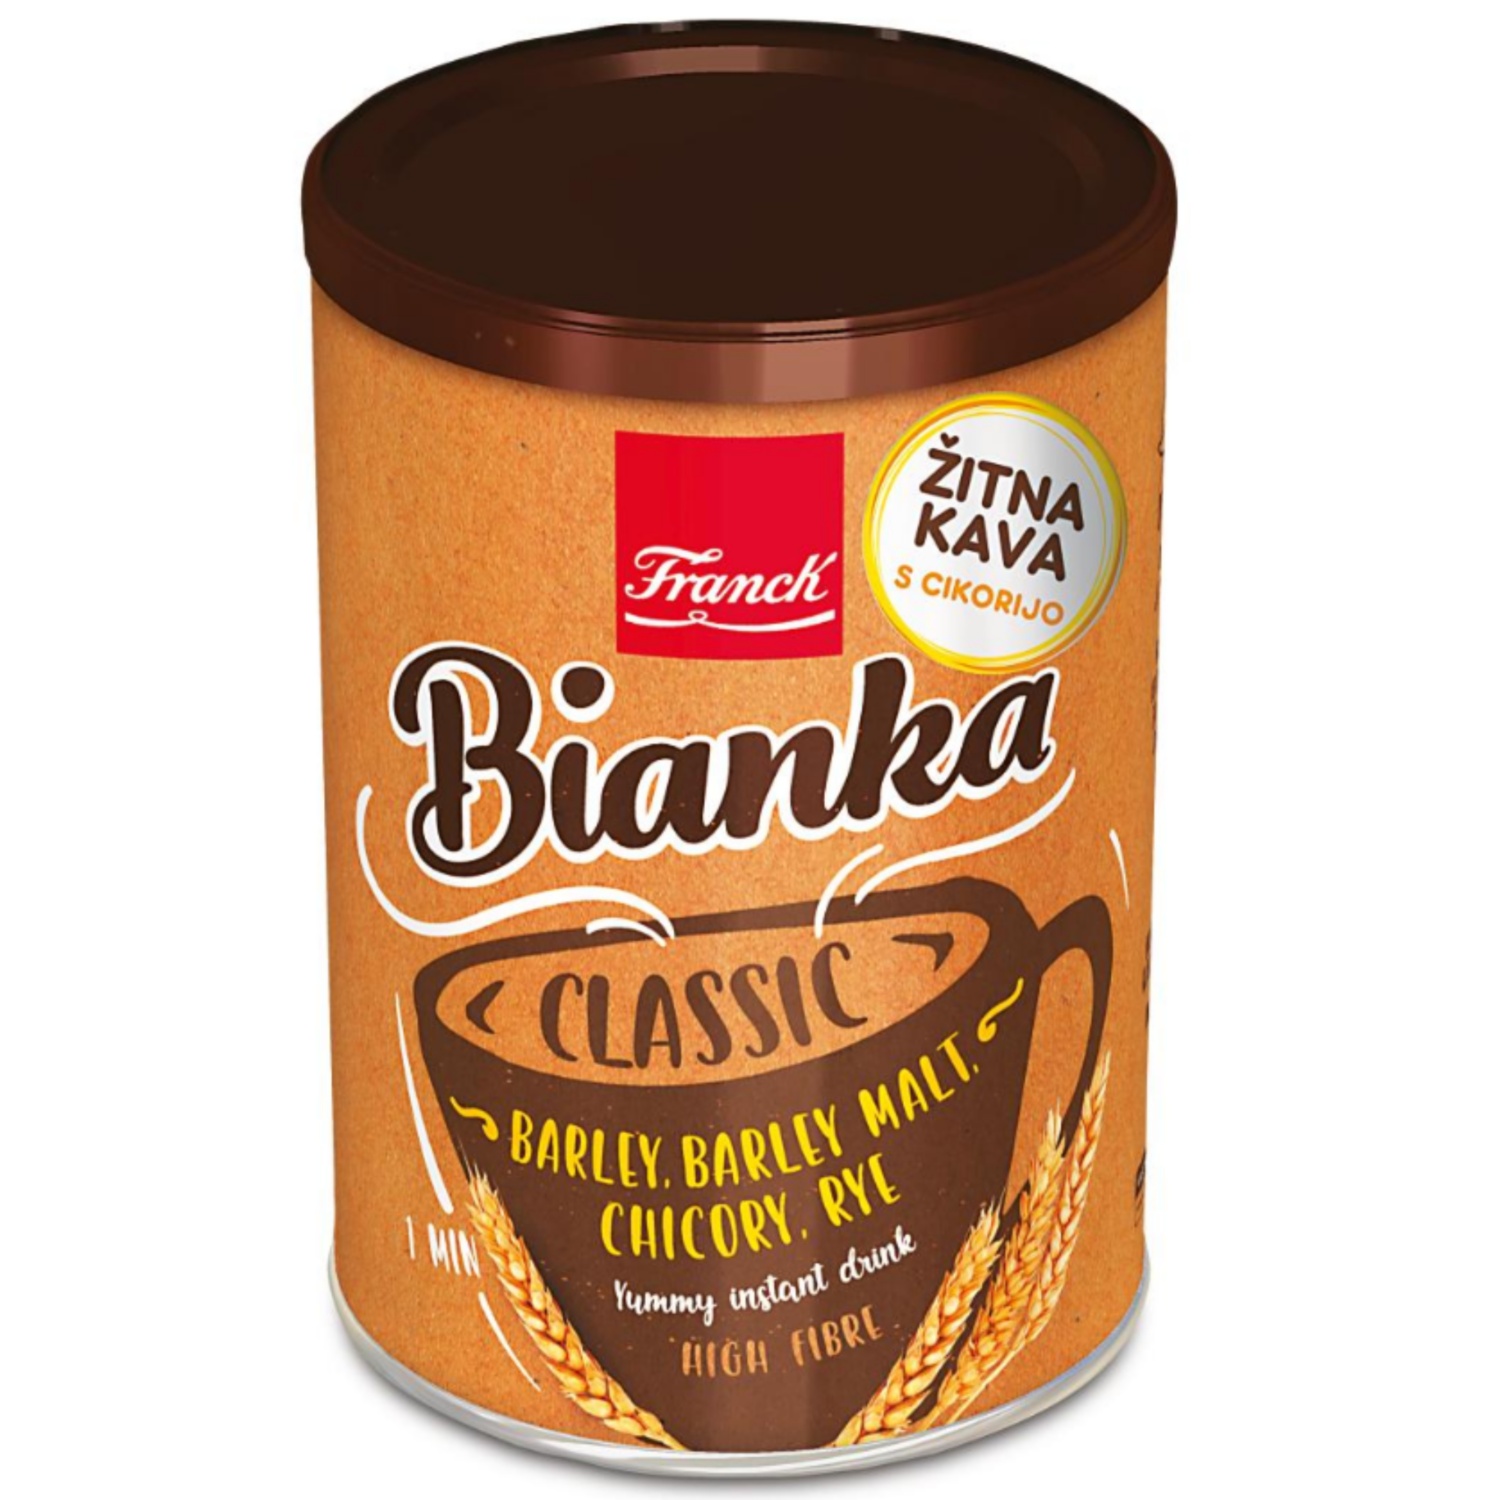 FRANCK Žitna kava Bianka, Classic